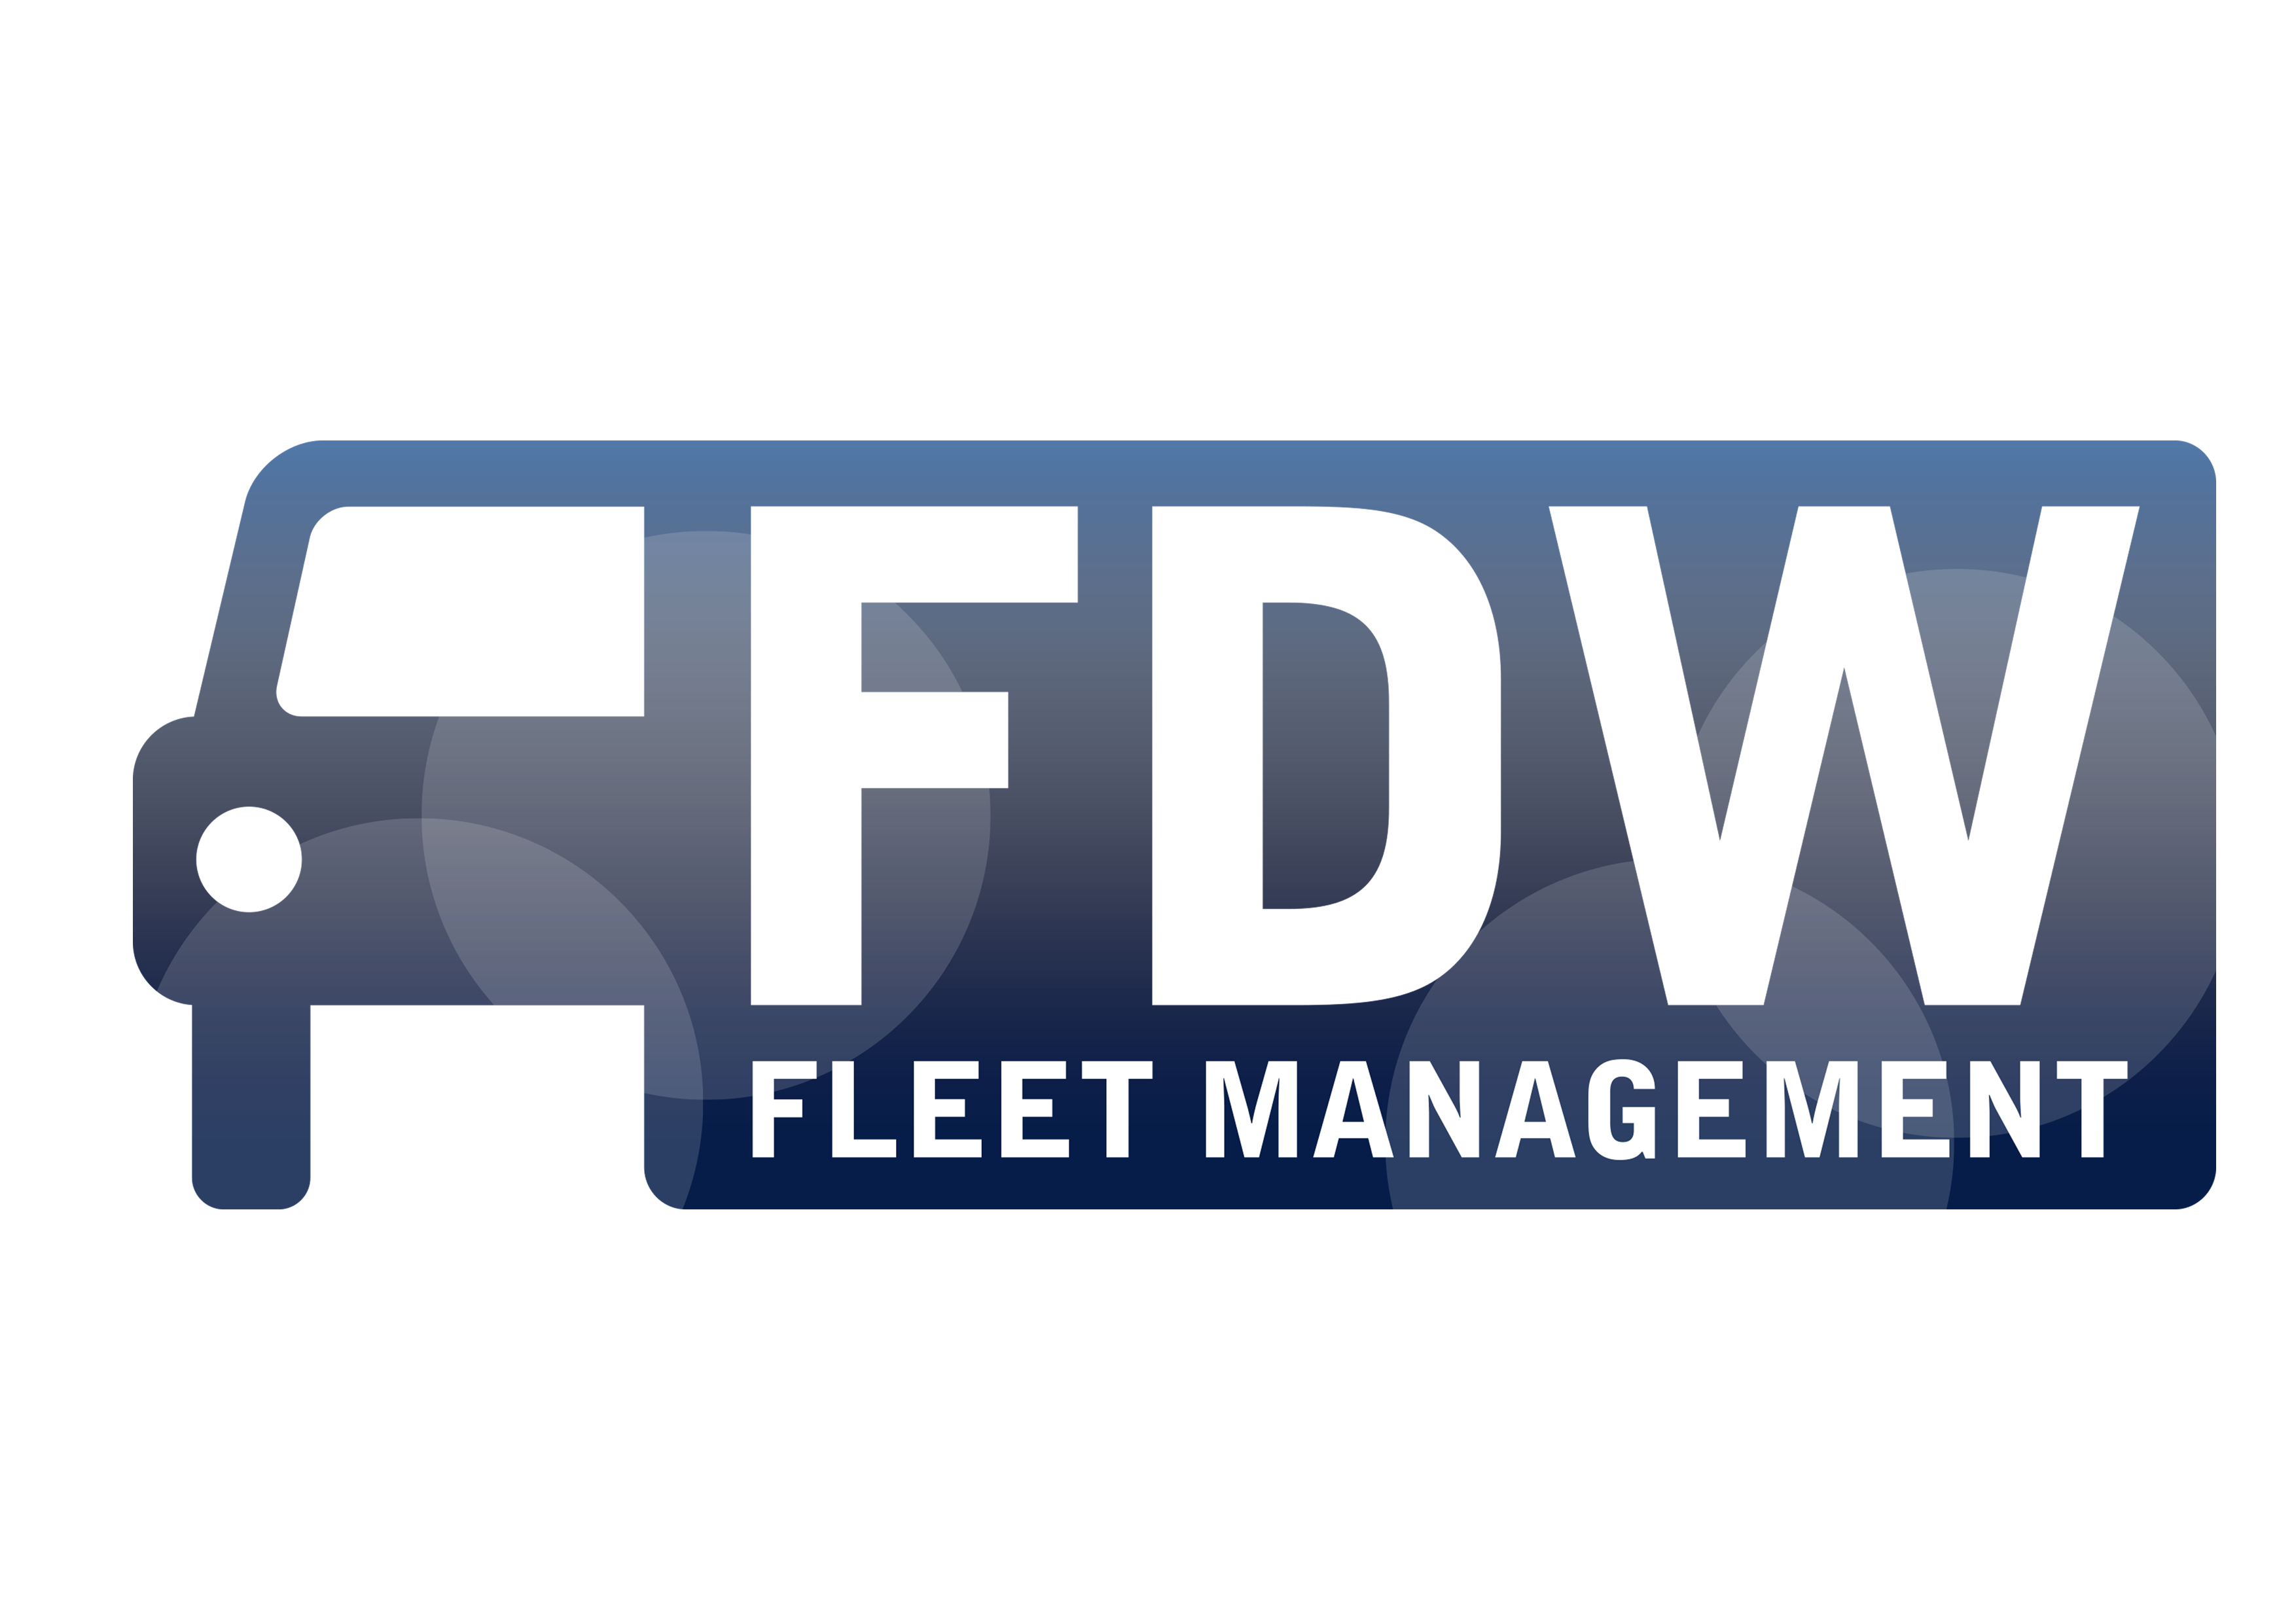 FDW Fleet Management